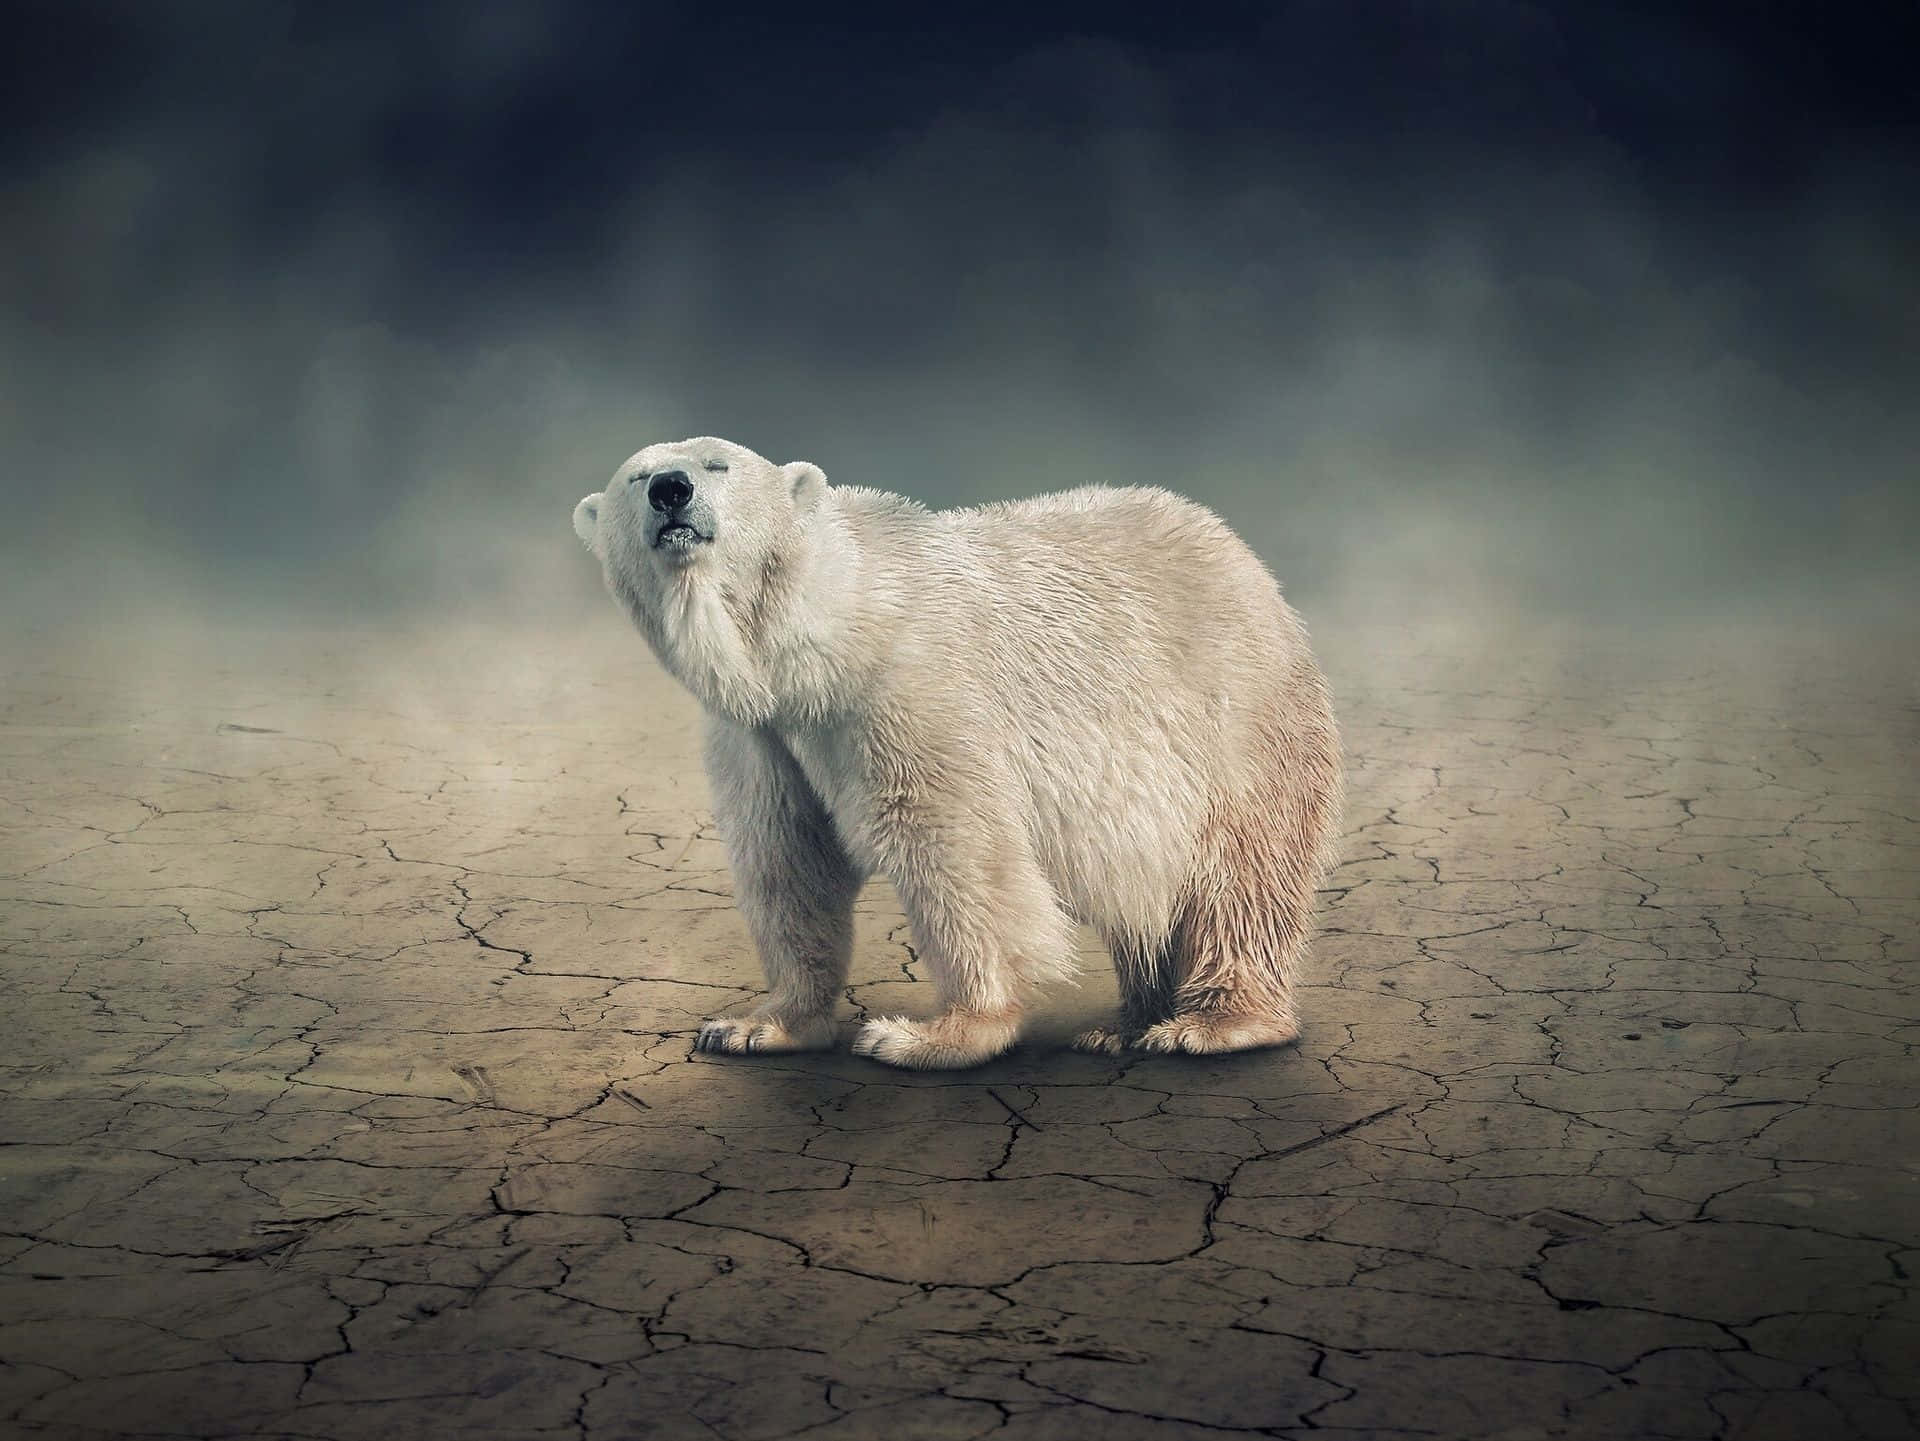 A peaceful Polar Bear in its natural habitat.